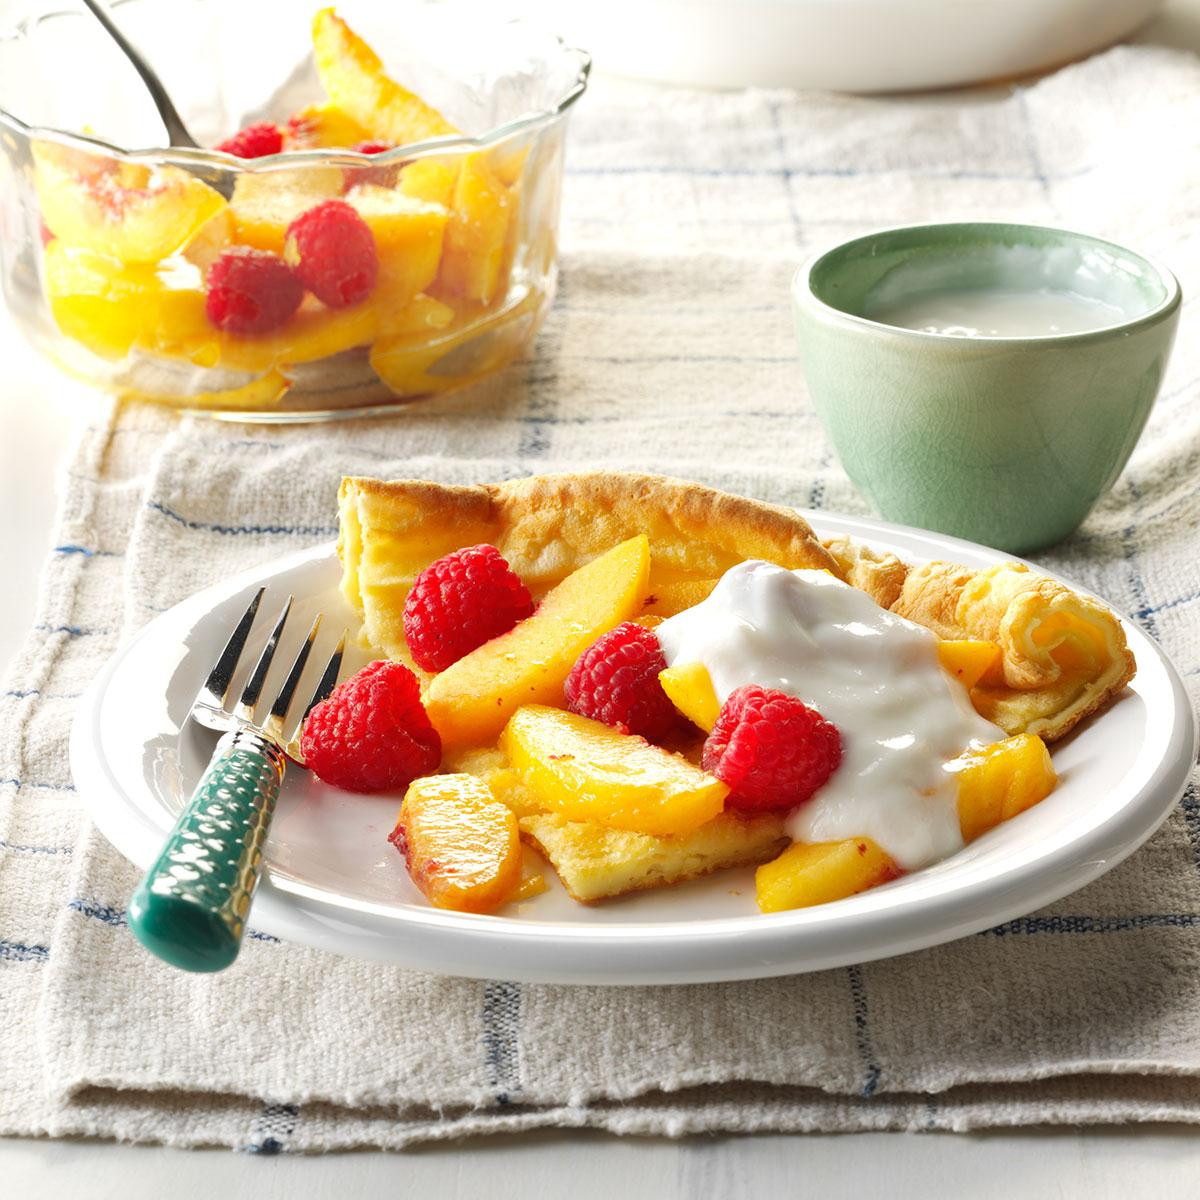 Fruit Breakfast Recipes
 40 Tasty Fruit Breakfast Recipes